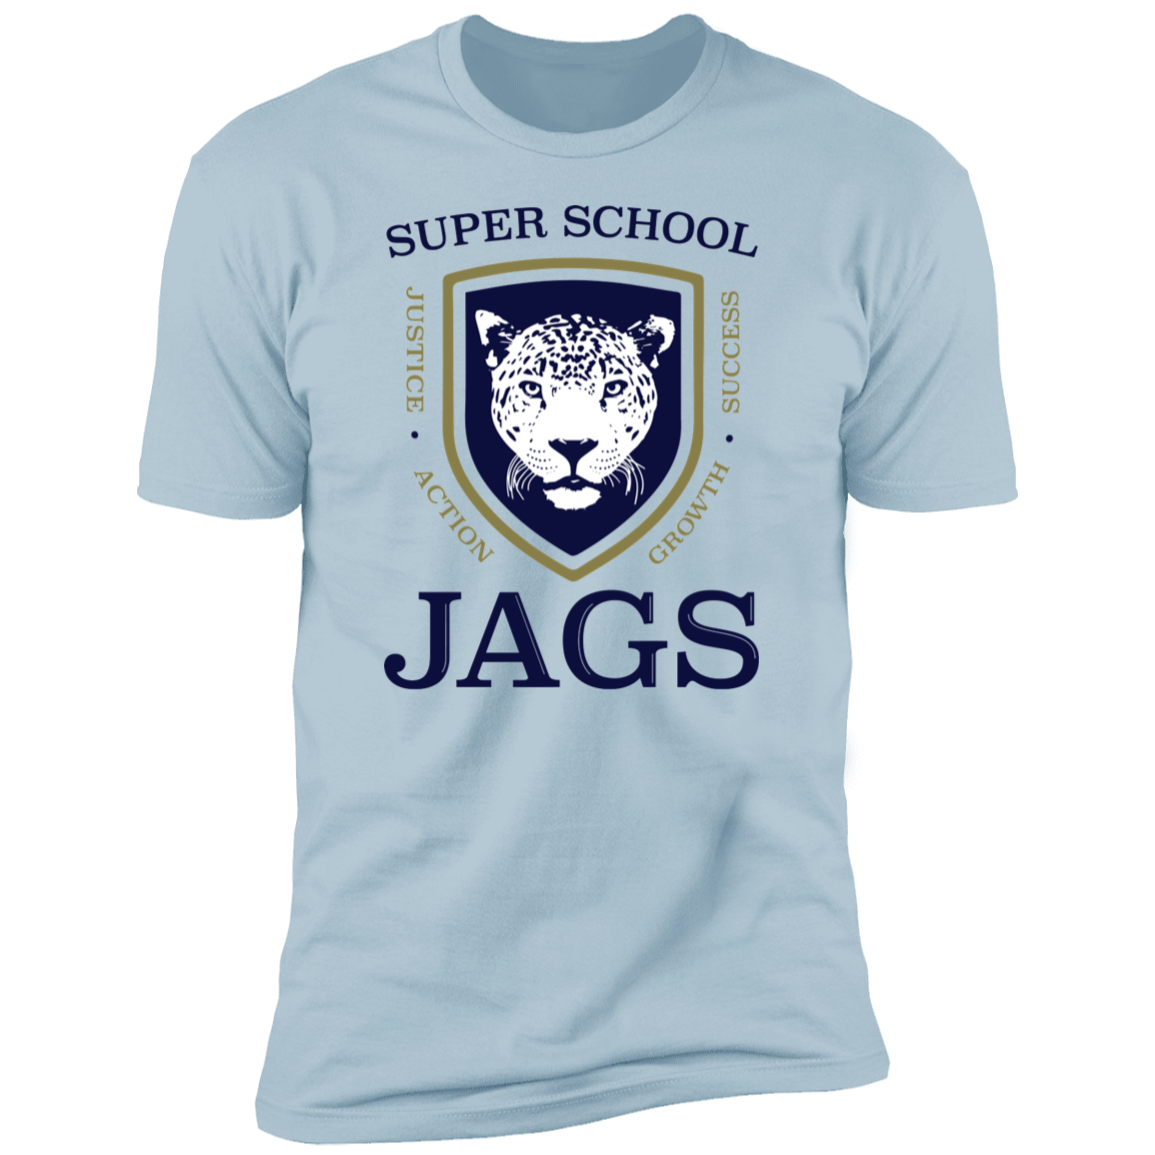 Premium Soft T-Shirt - Super School